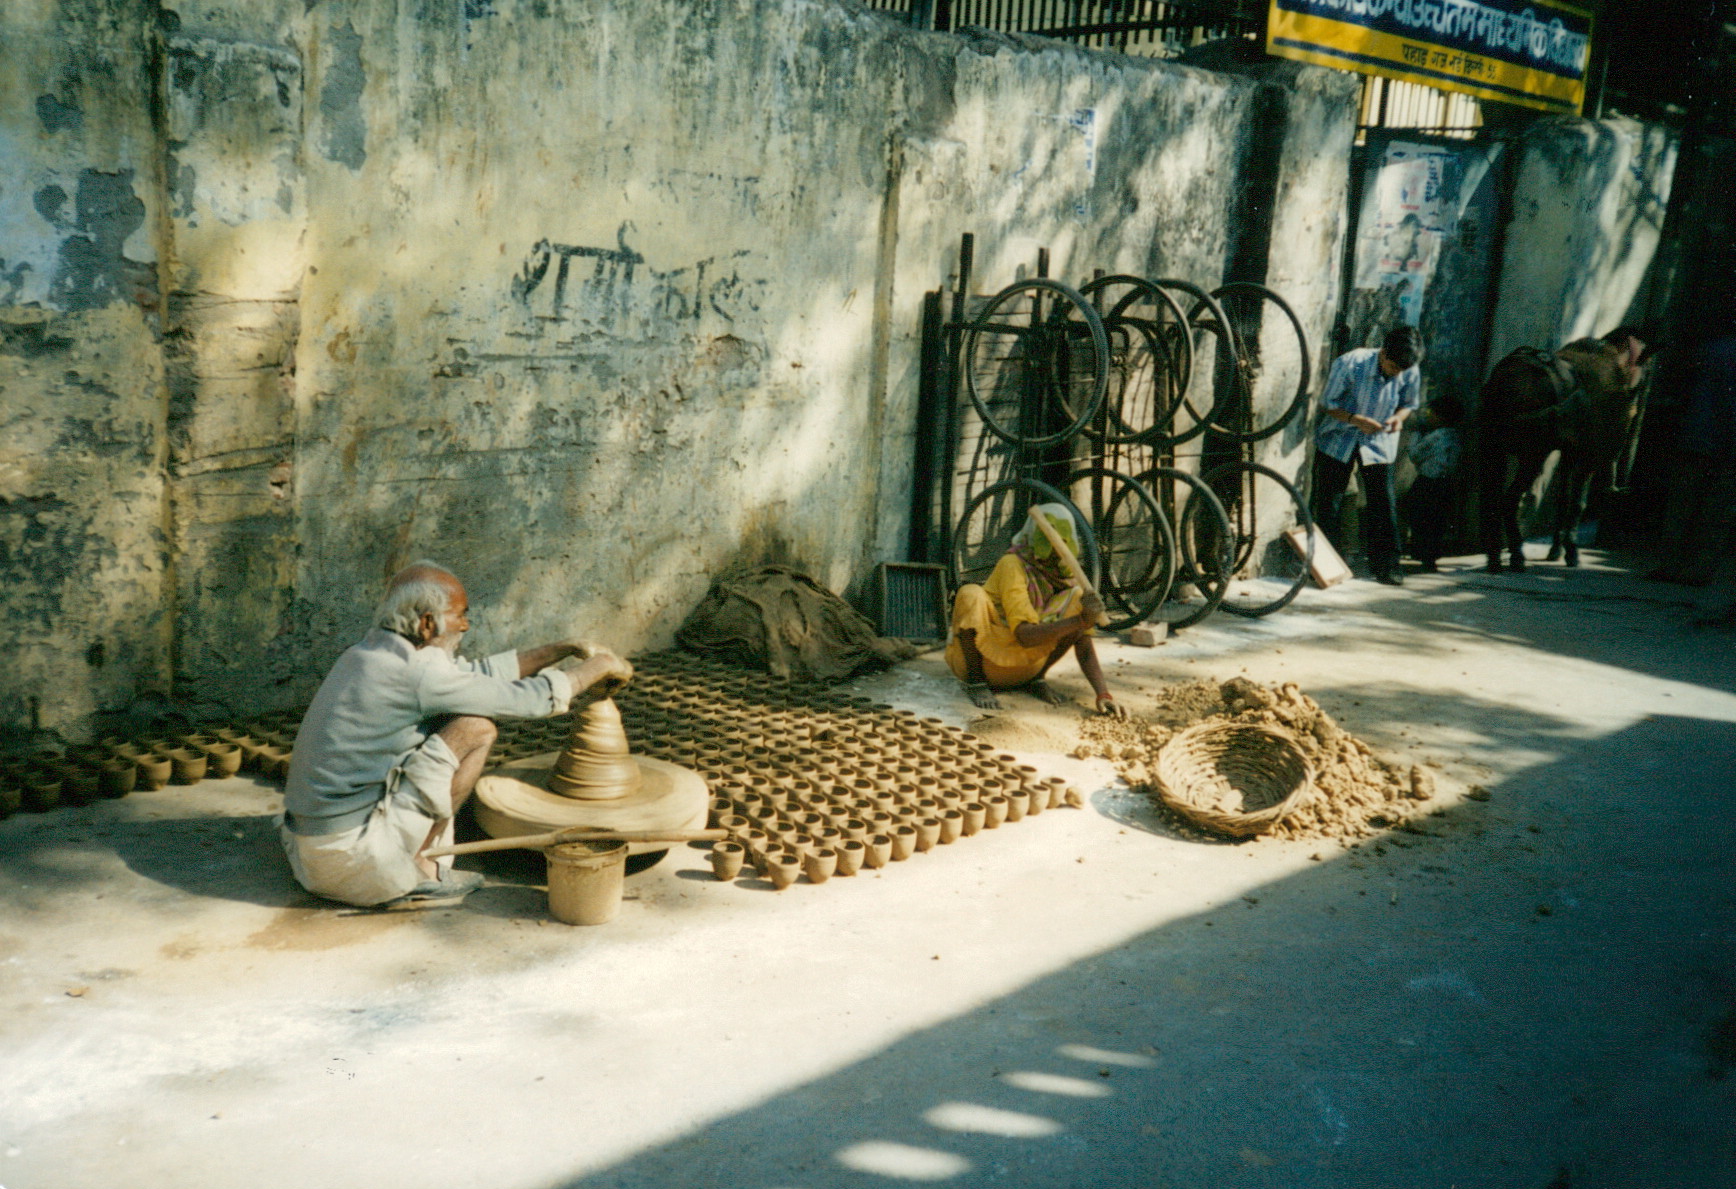 Making Clay Pots India 1997